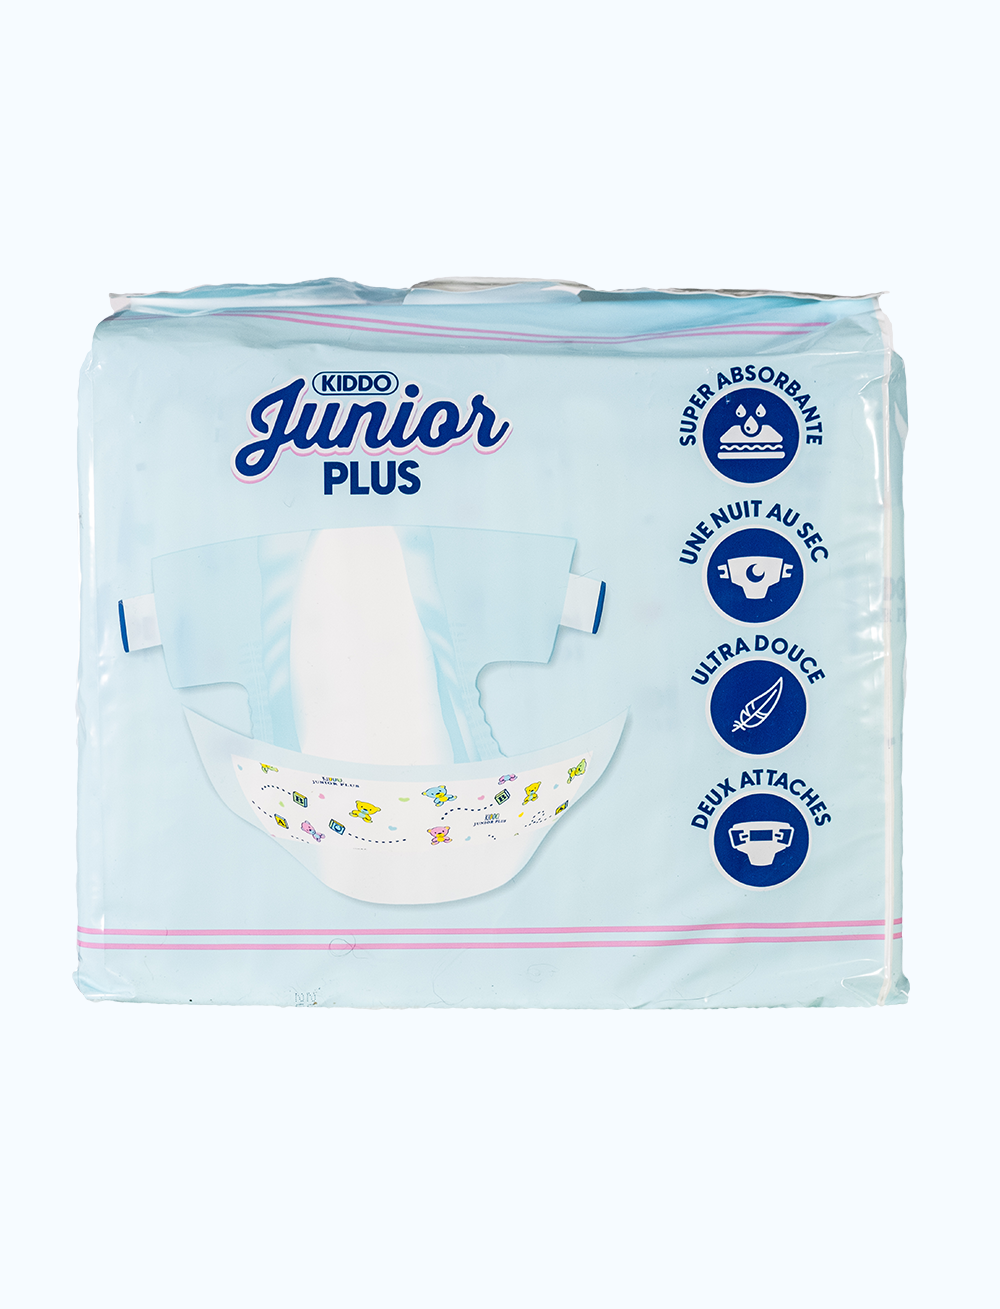 Kiddo Junior Plus Blue - Kiddo Diapers USA